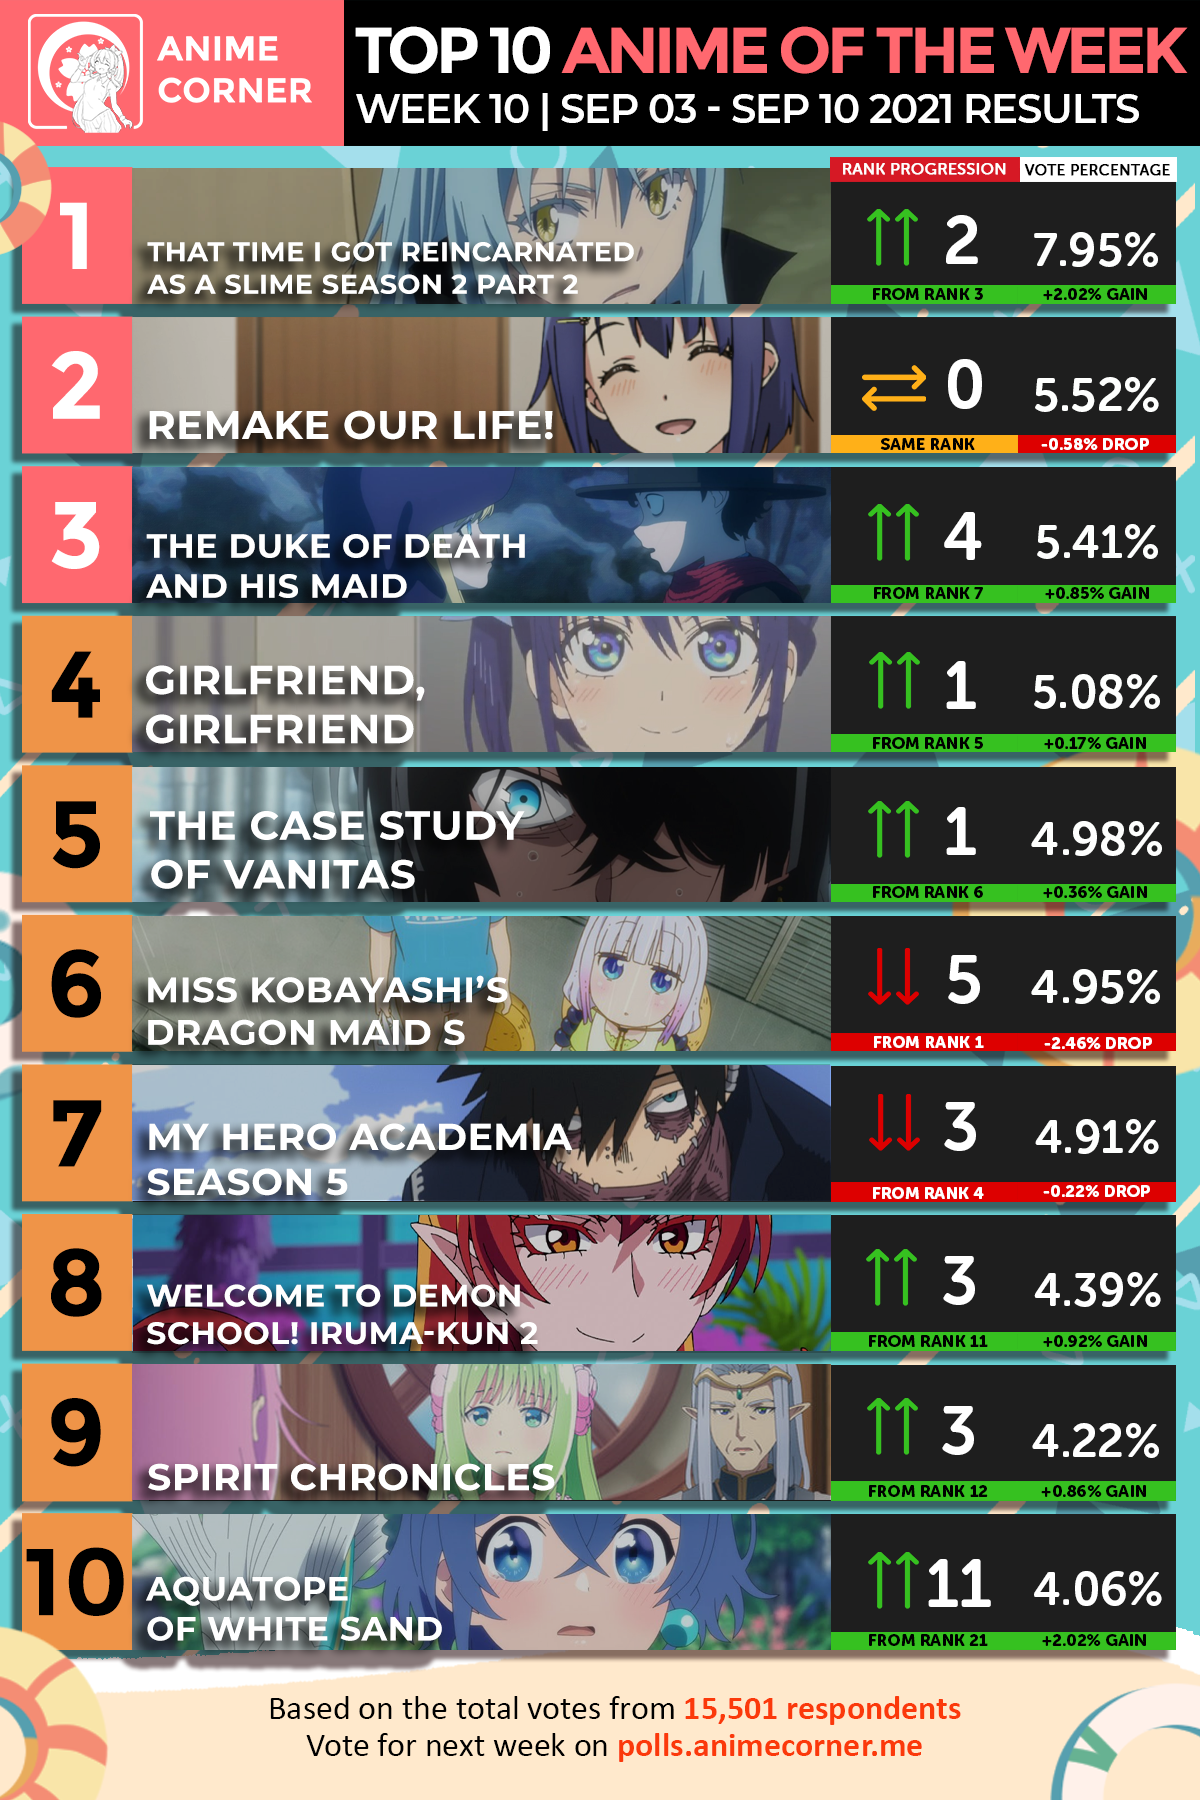 Top 10 Anime Summer 2021 Week 10 - Anime Corner Polls